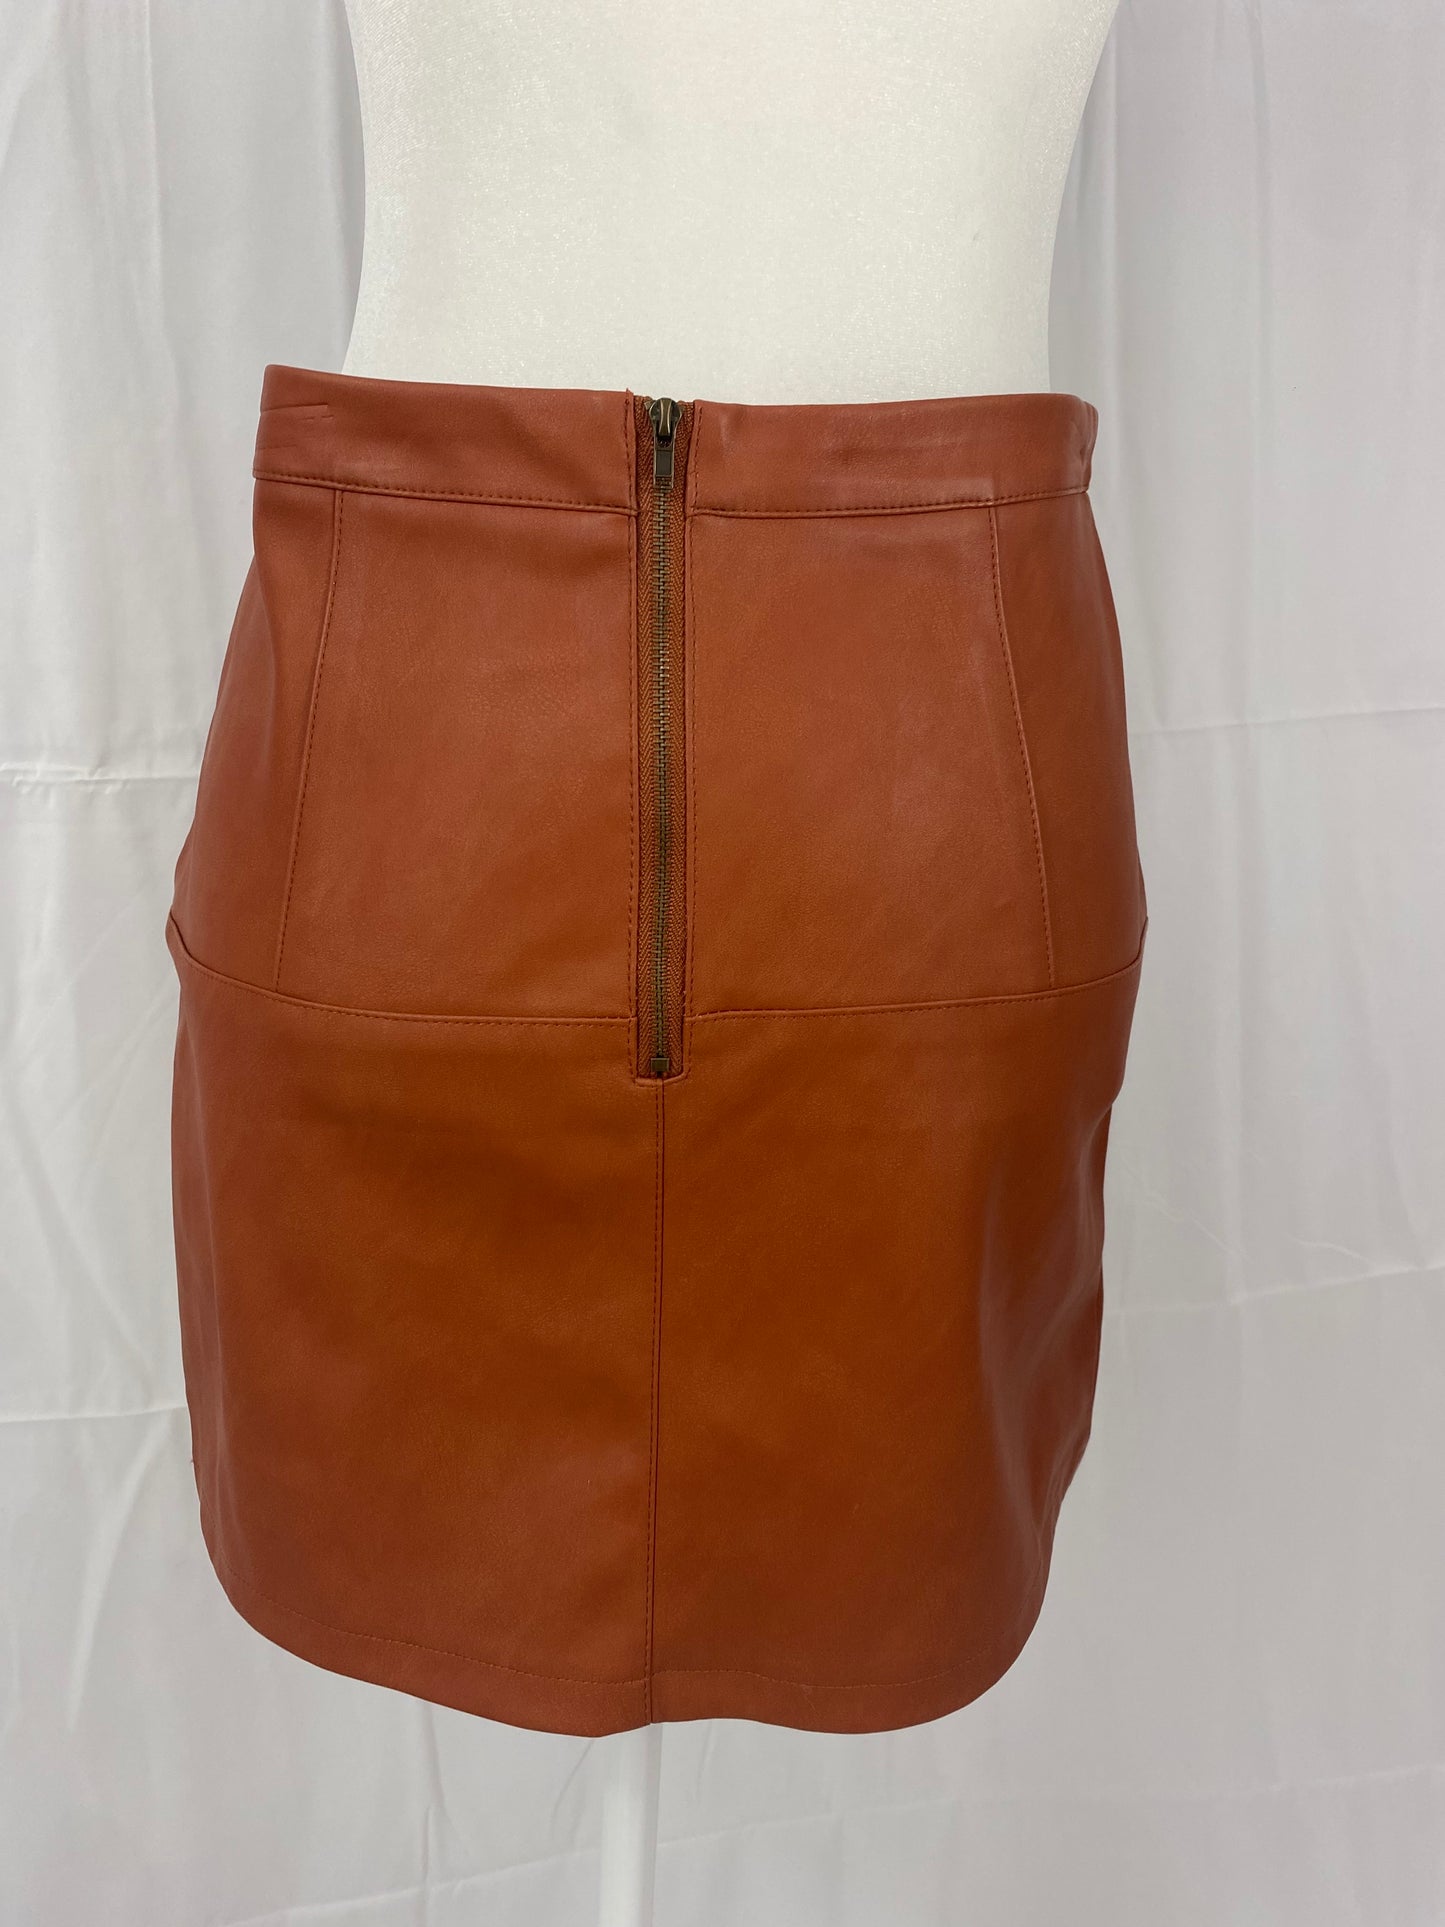 Brown pleather skirt w/ pockets